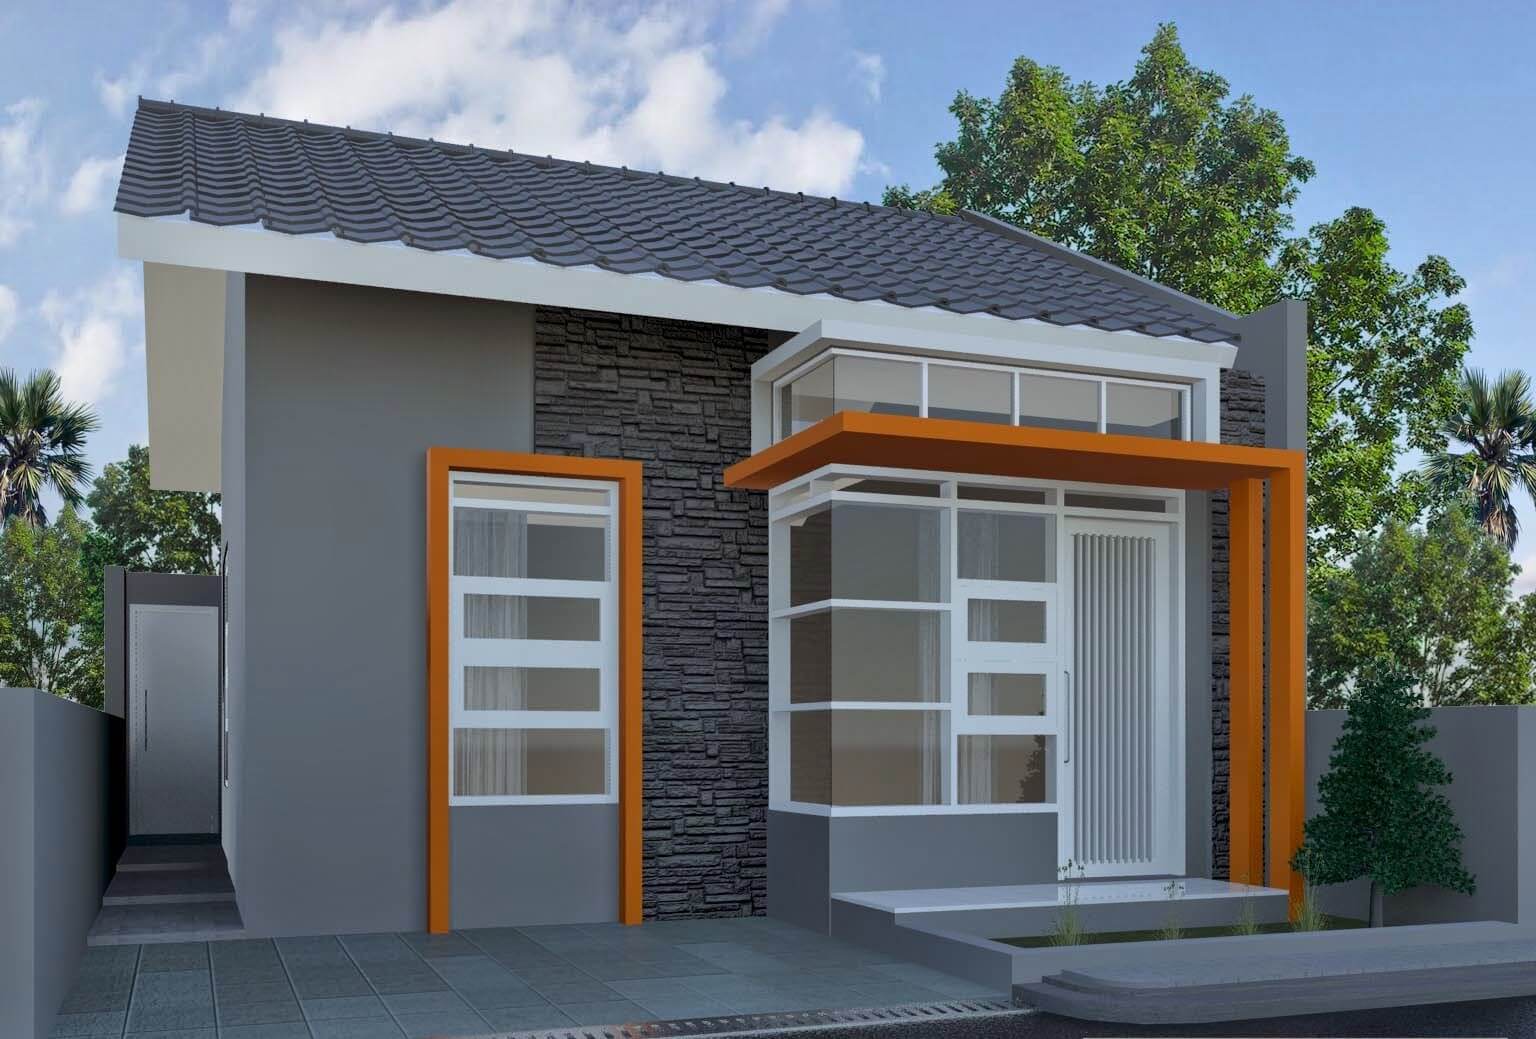 Desain Rumah Minimalis Modern Ukuran 5x12 Jual Bata Ekspos